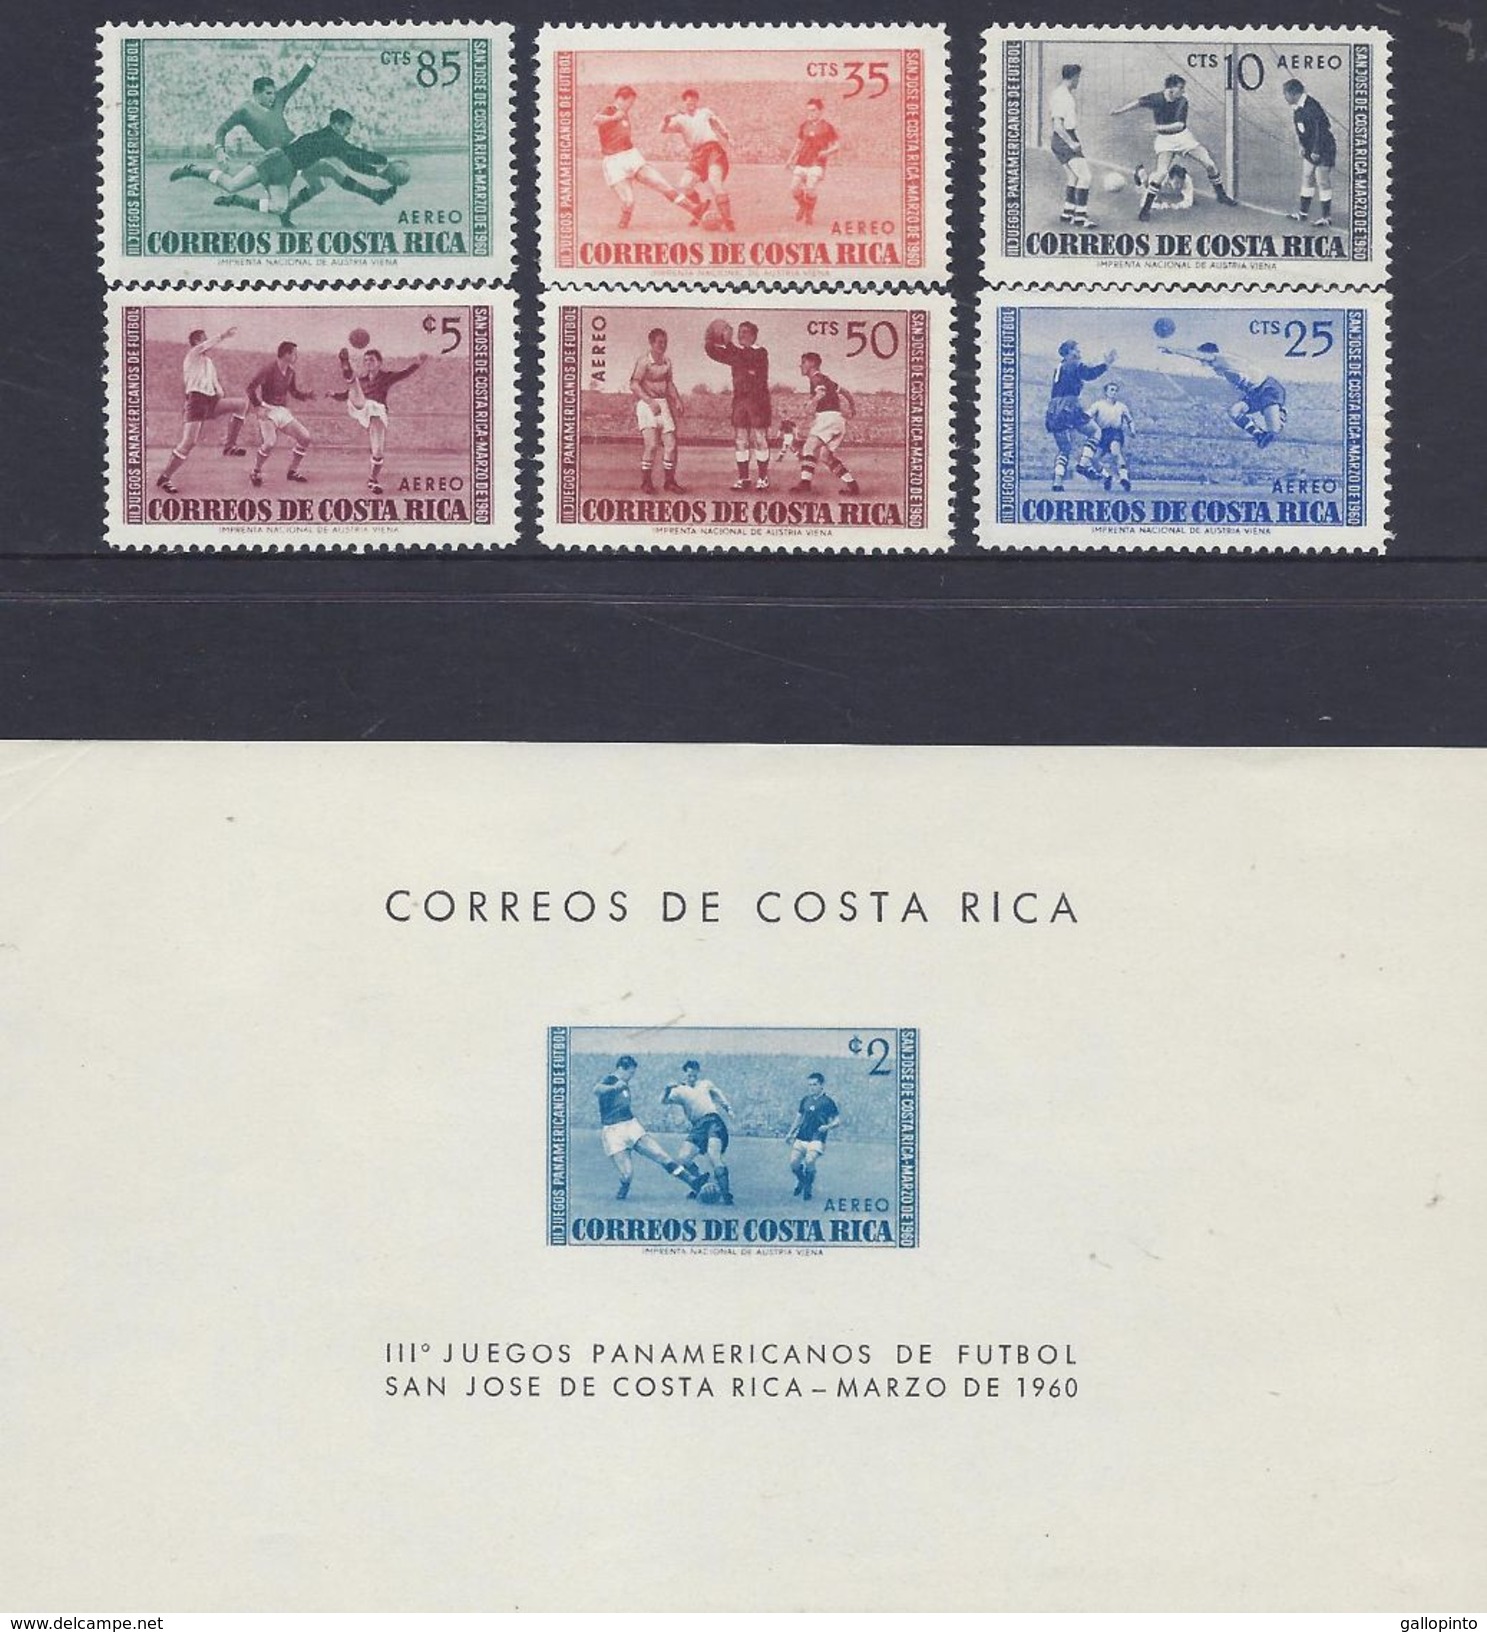 COSTA RICA PAN-AMERICAN SOCCER GAMES, SAN JOSE Sc C283-C289 MLH 1960 - Copa América